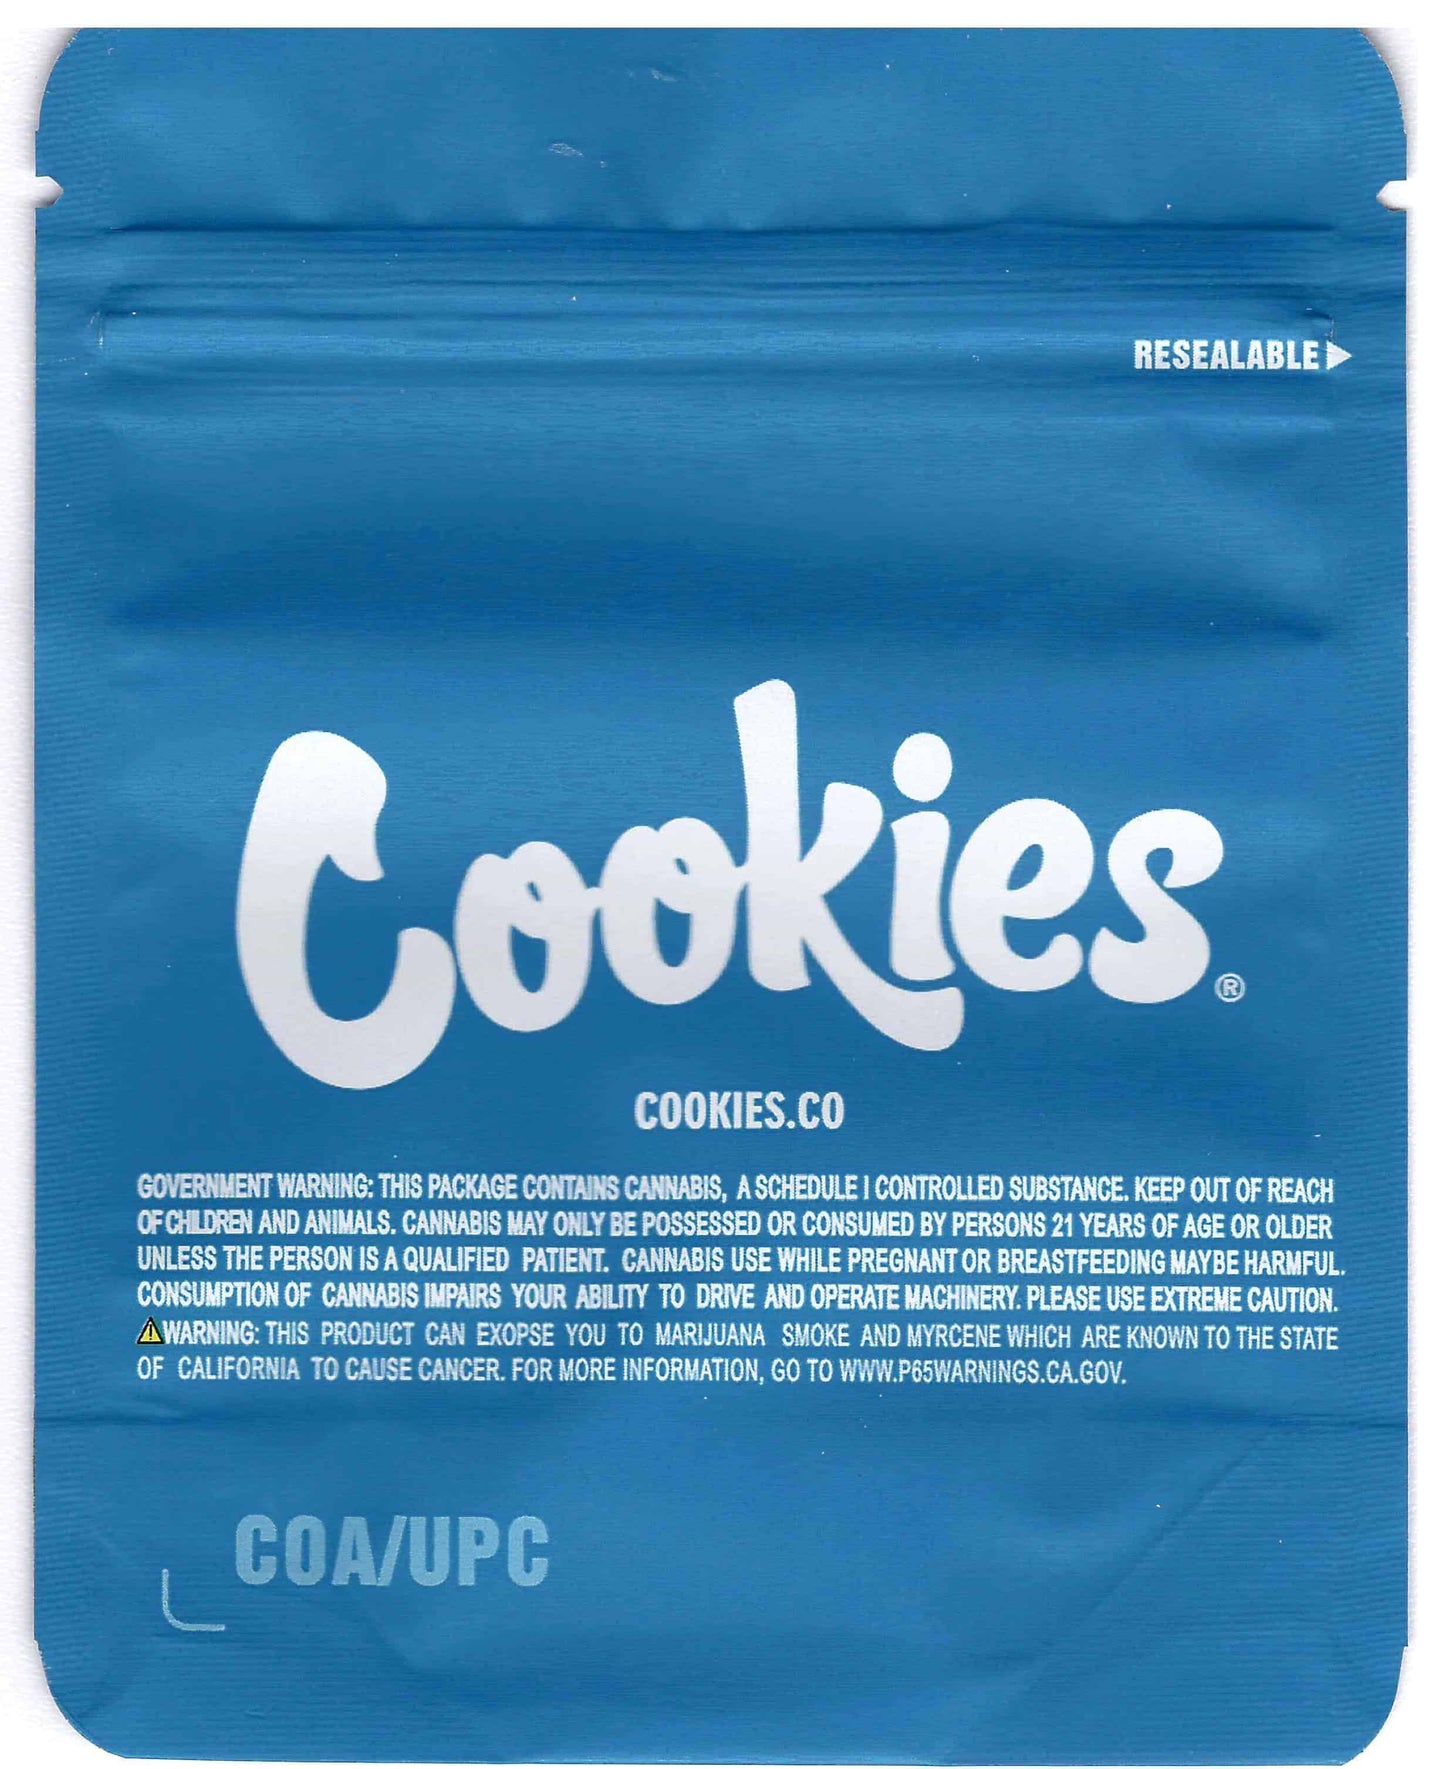 Cookies Mylar Bags 3.5g - Choclava